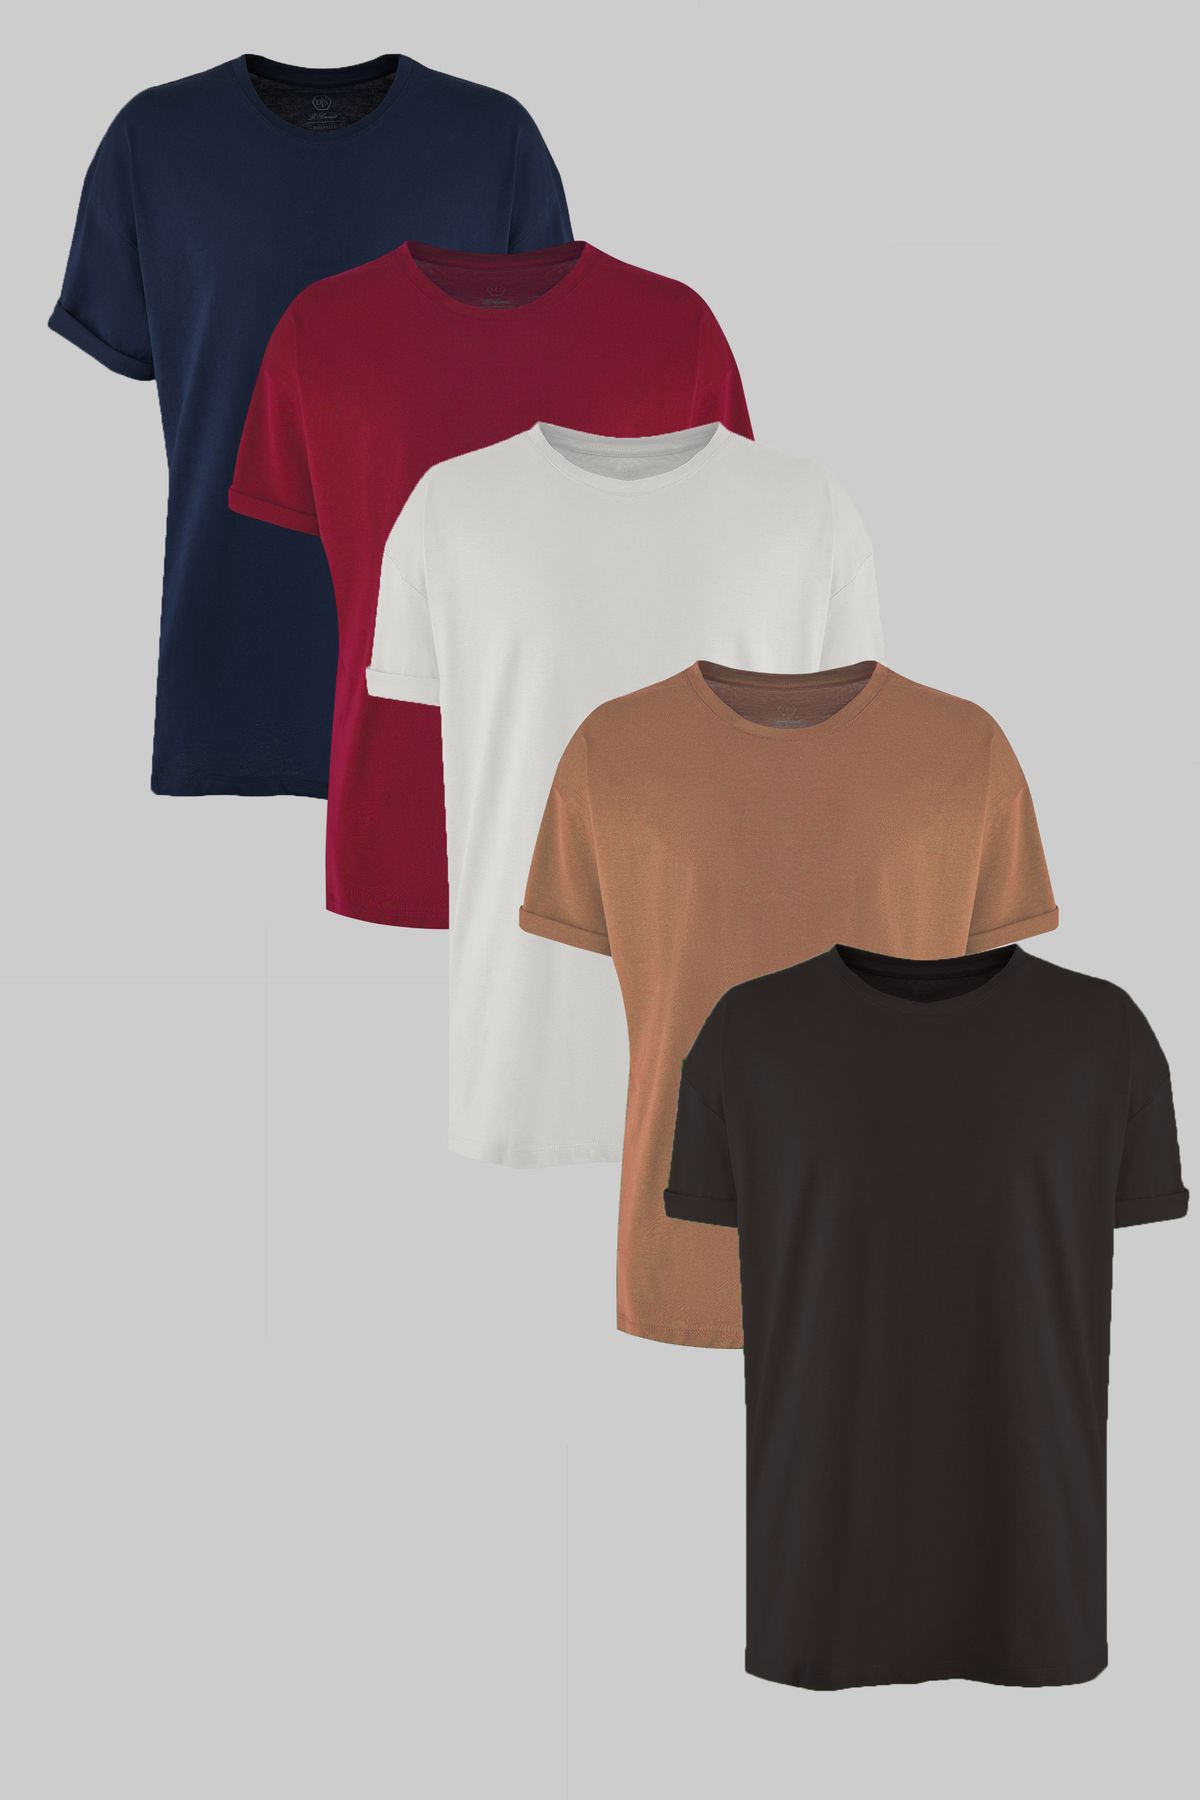 D'S Damat Ds Damat Comfort Lacivert/bordo/beyaz/vizon/antrasit 5'li Bol Kesim %100 Pamuk T-shirt